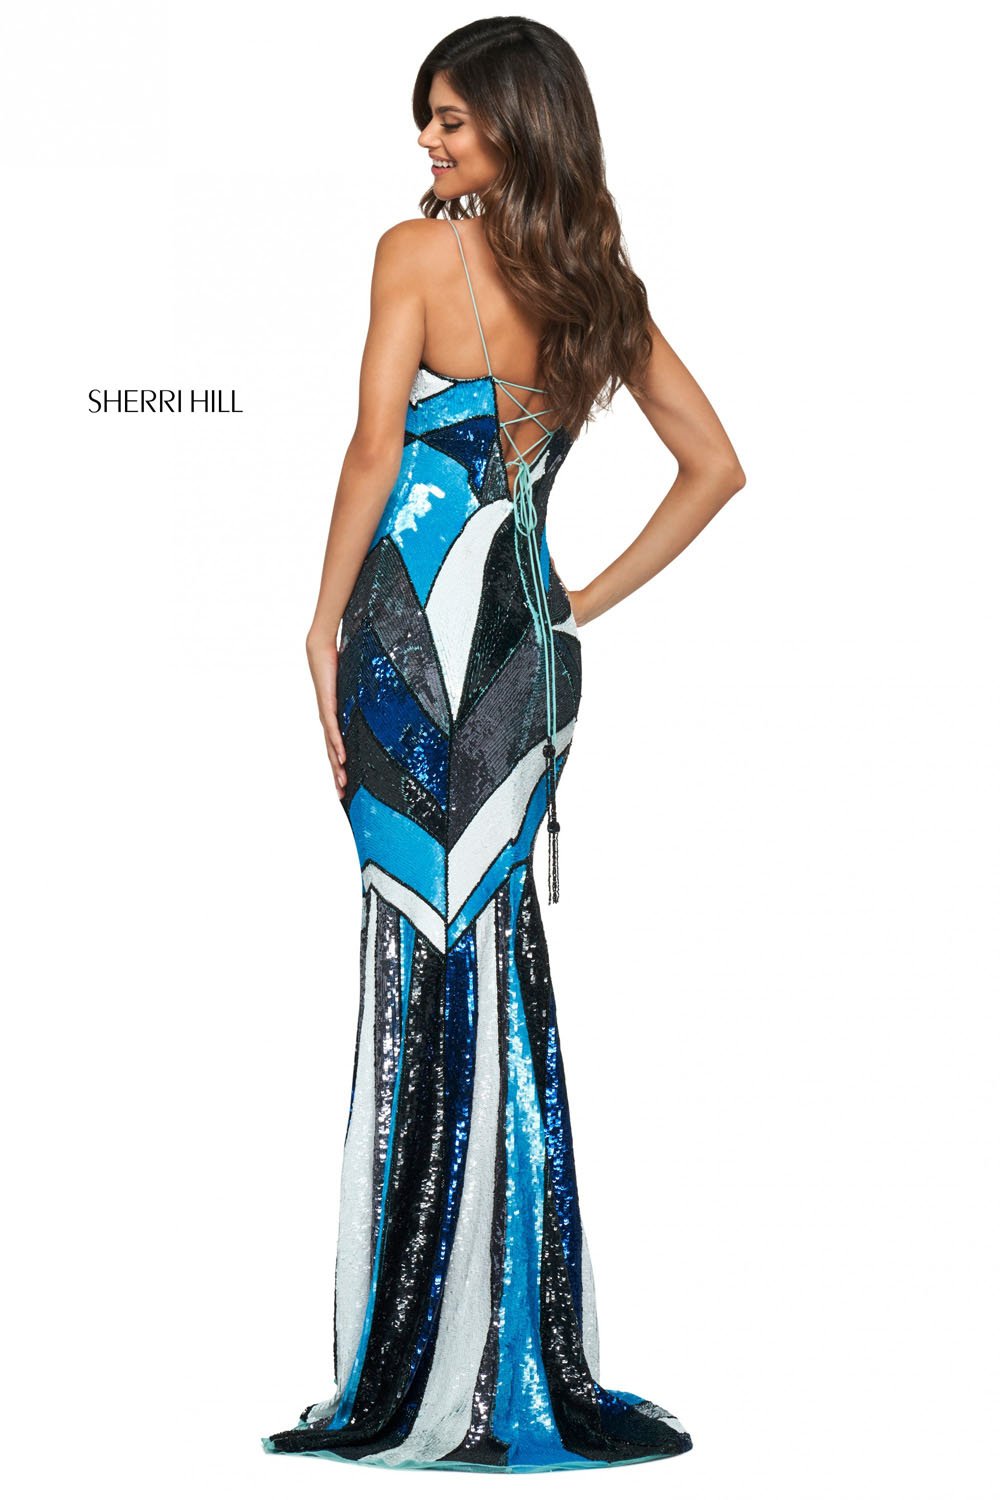 Sherri Hill 53899 dress images in these colors: Light Blue Multi, Emerald Multi.